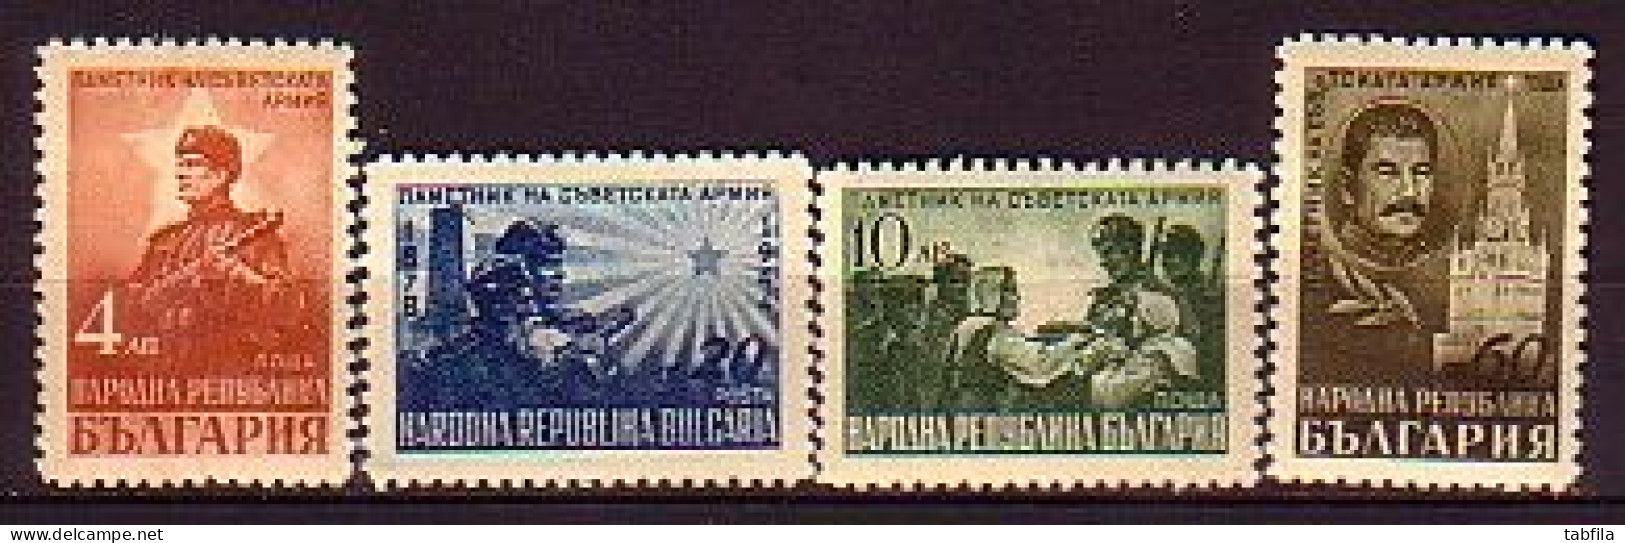 BULGARIA - 1948 - Monument To The Soviet Army - Mi 656 / 659 MNH - Unused Stamps